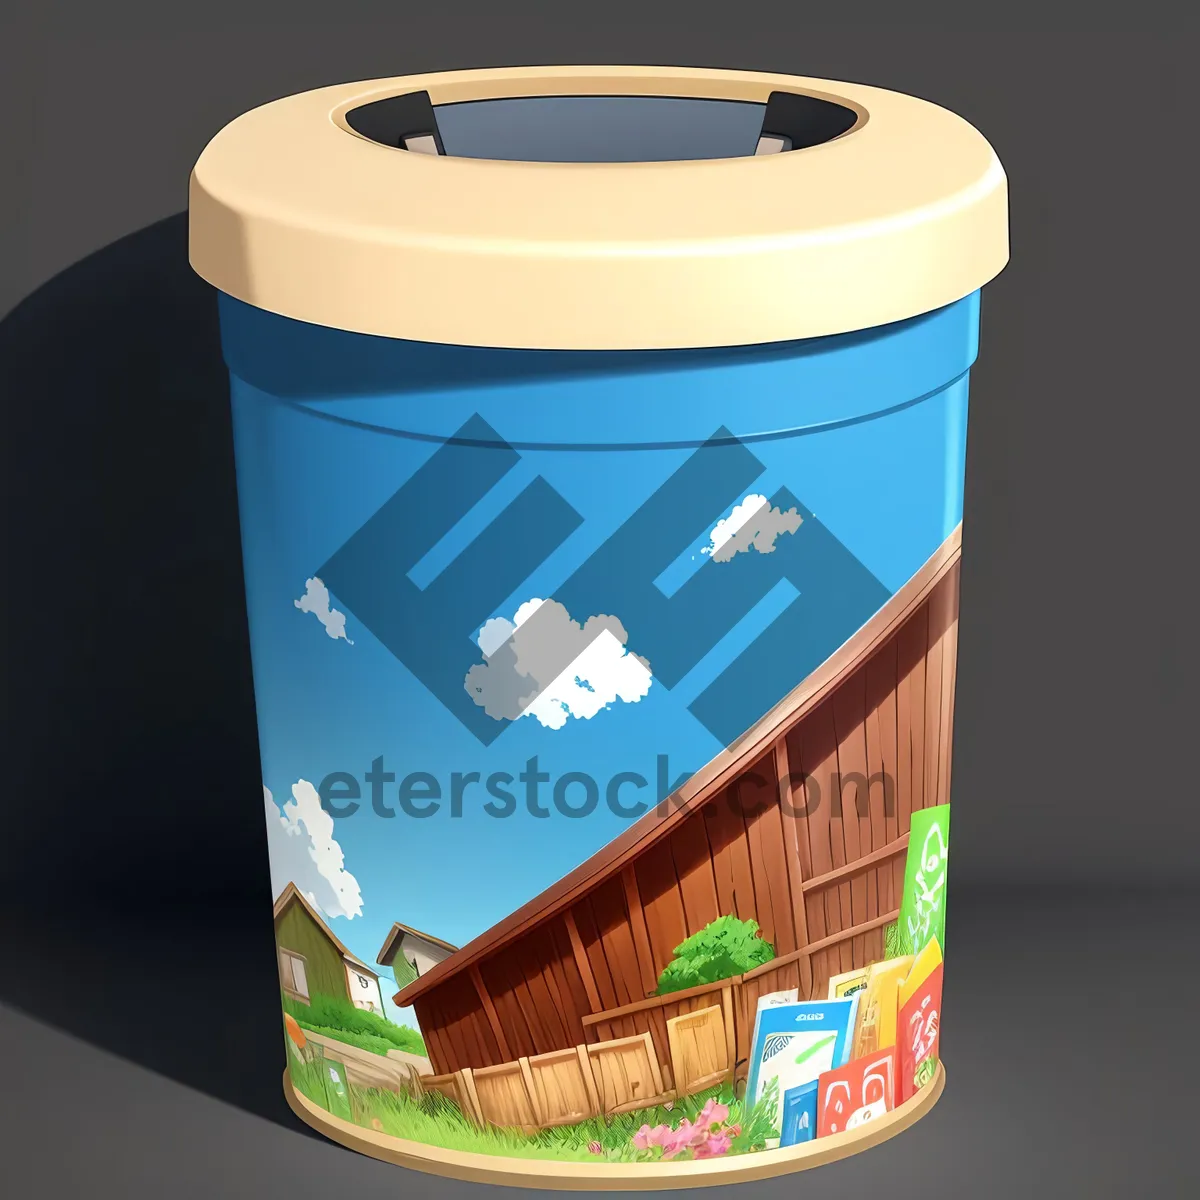 Picture of Metal Rain Barrel - Container for Harvesting Rainwater